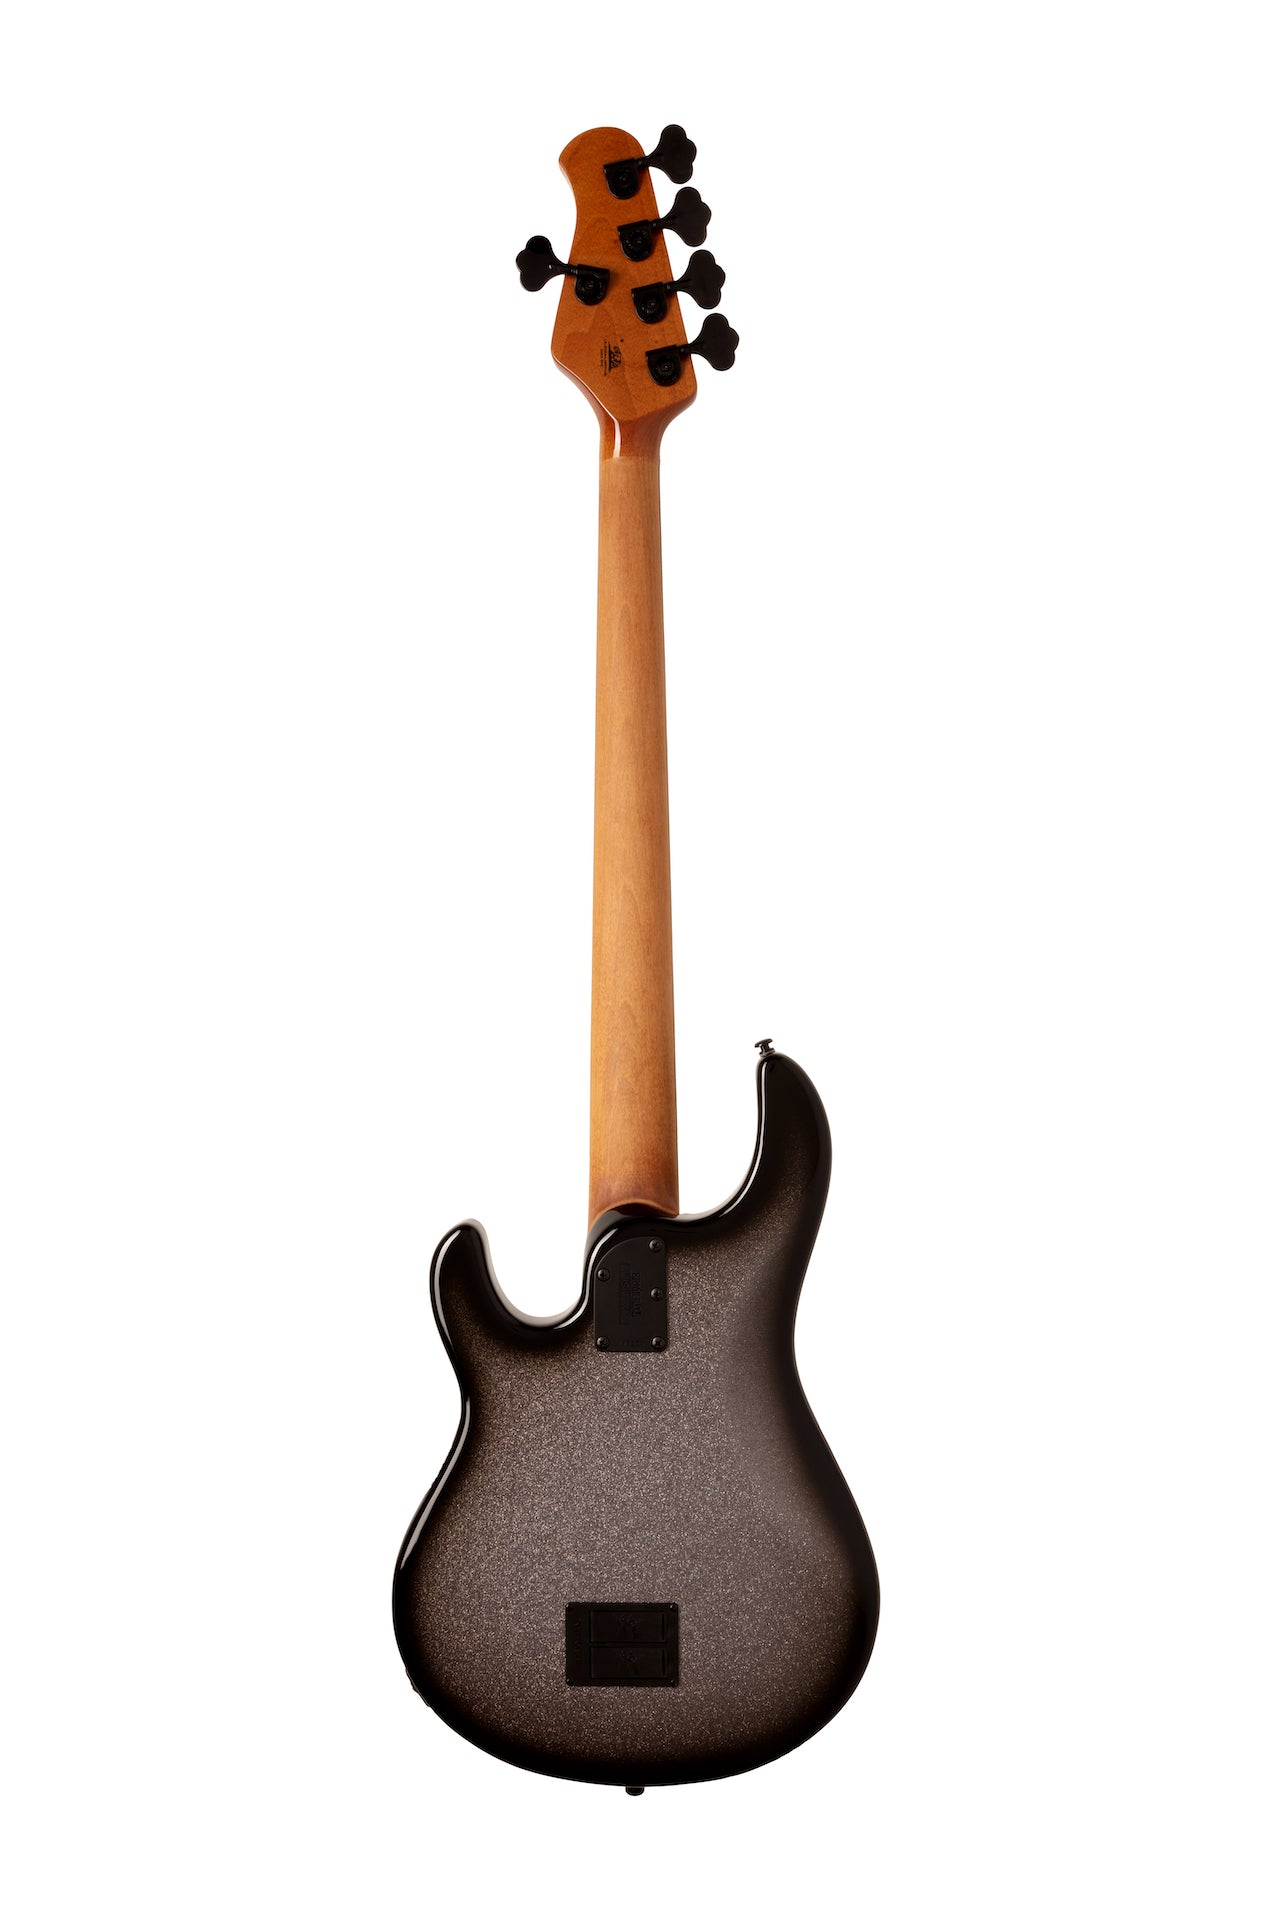 Ernie Ball Music Man StingRay Special 5 H Bass Guitar - Smoked Chrome with Ebony Fingerboard F97540 - HIENDGUITAR   Musicman bass